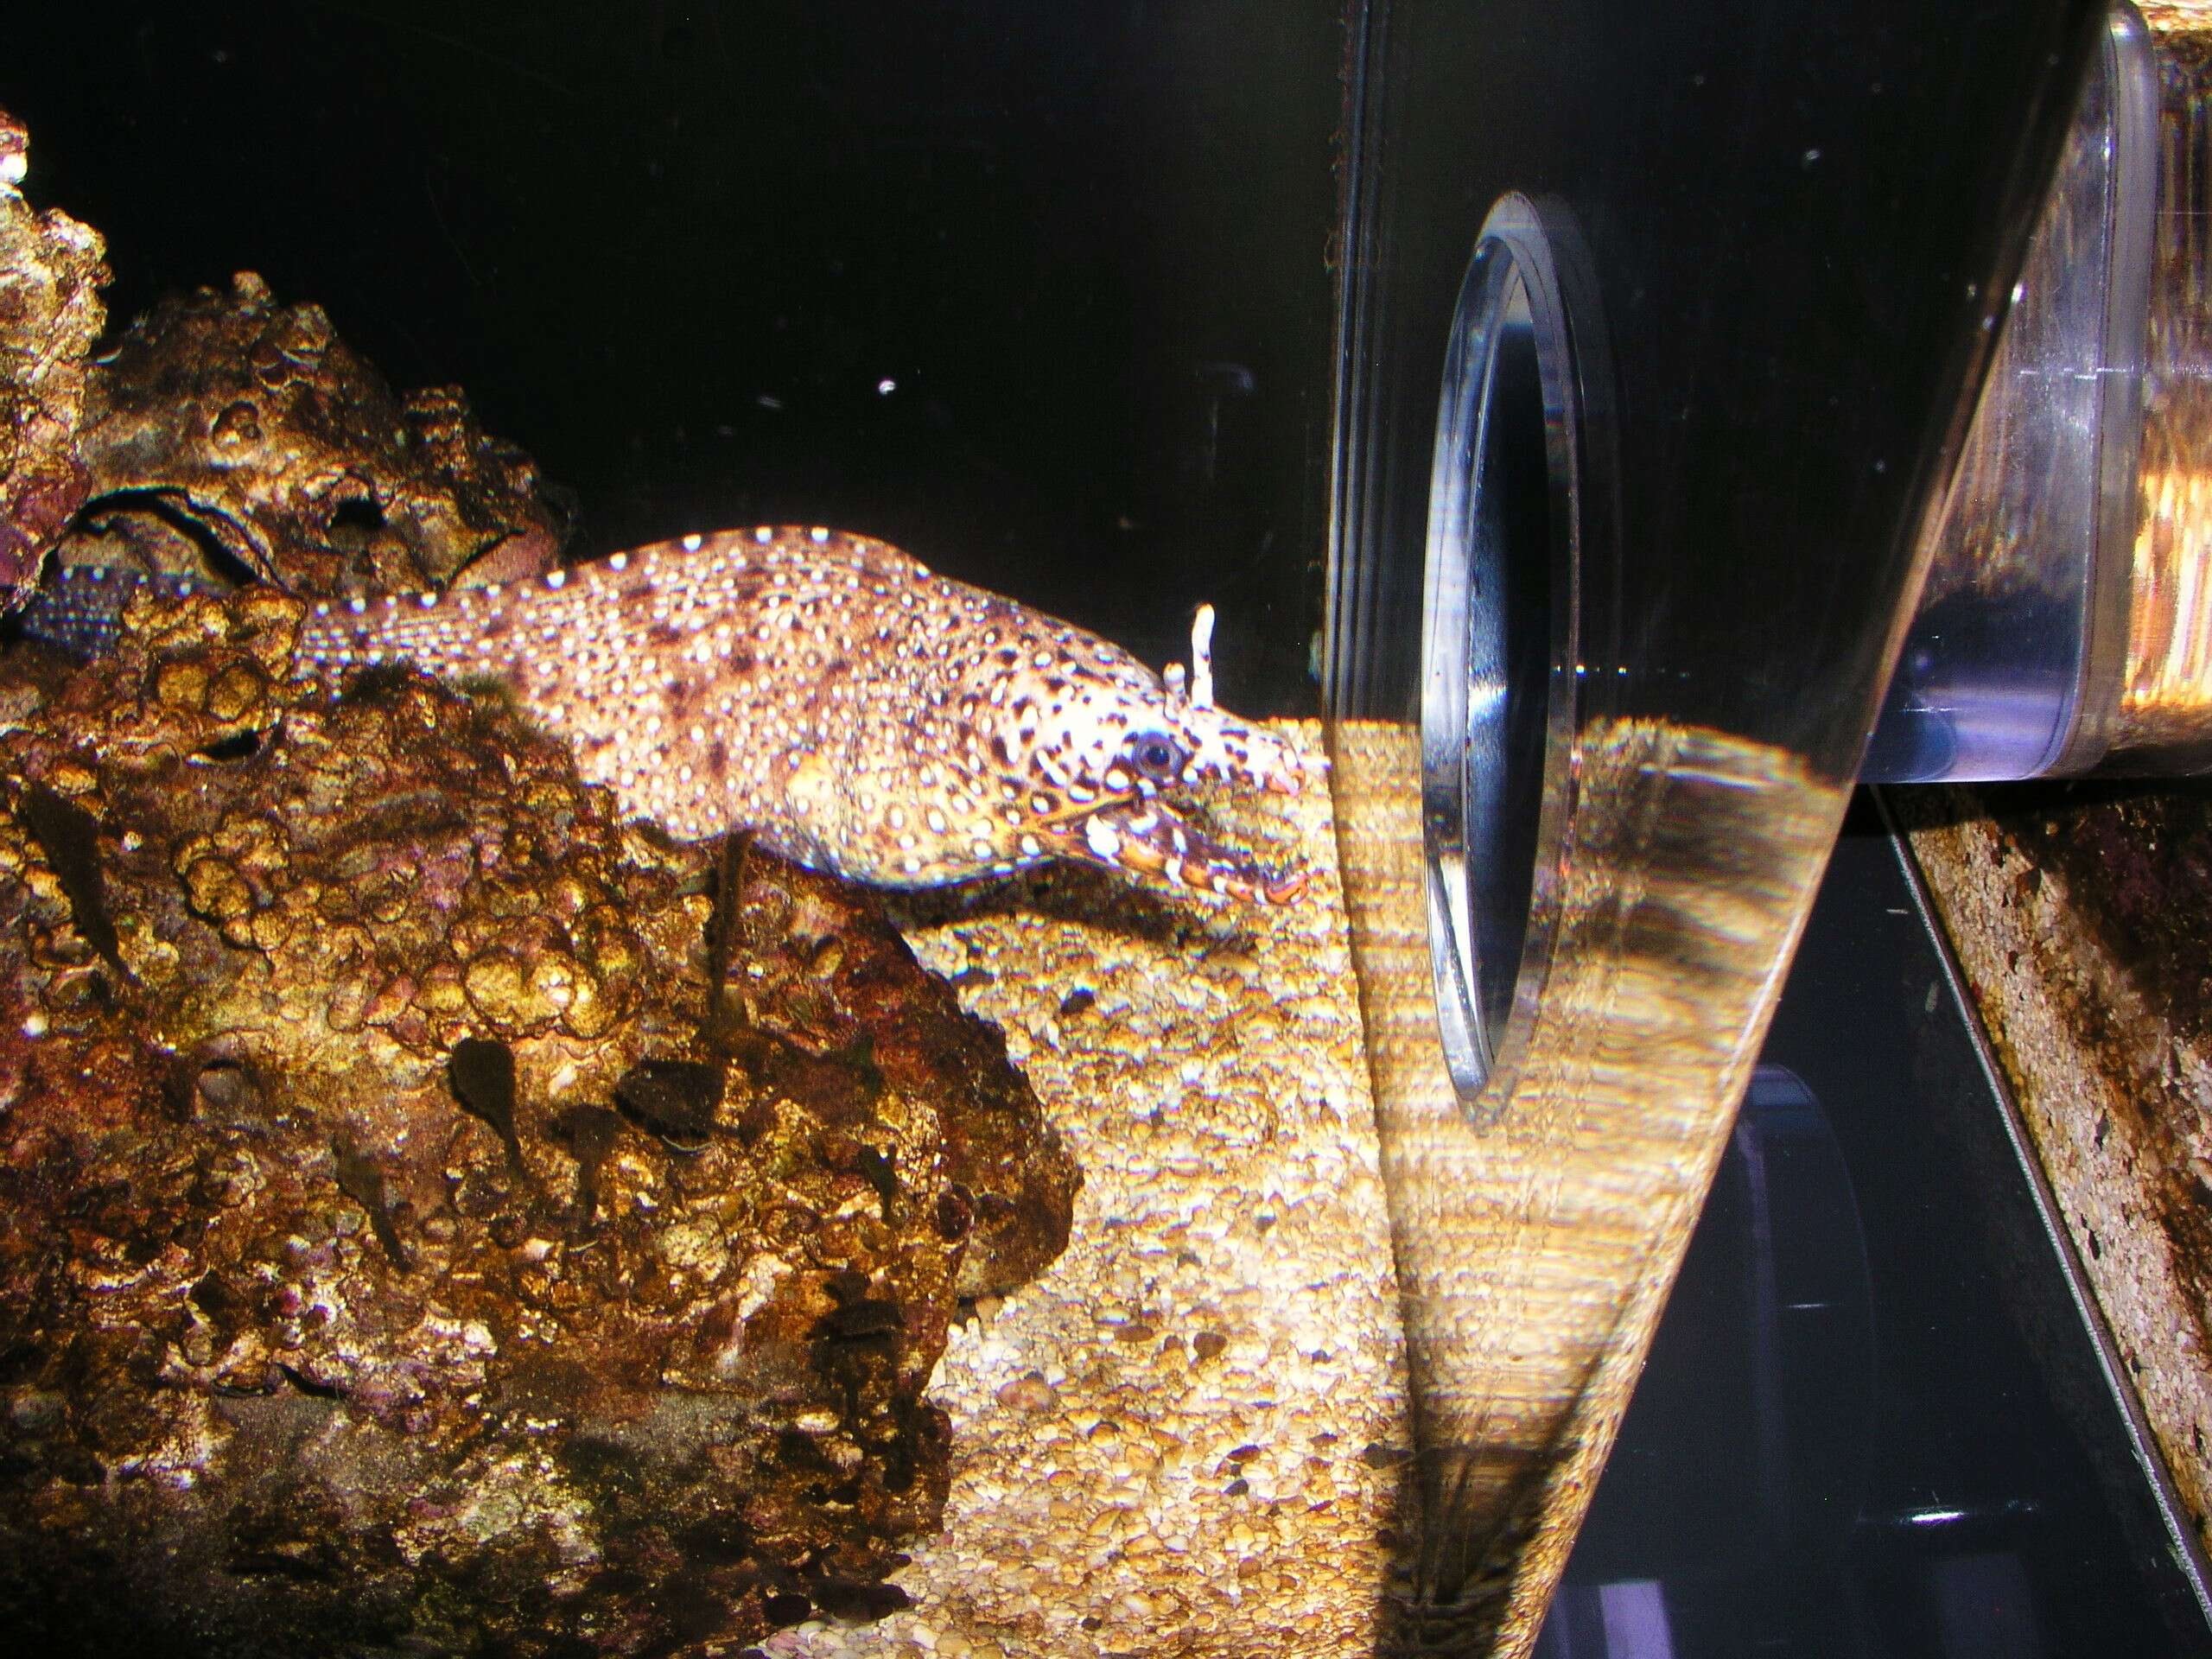 Image of Leopard moray eel